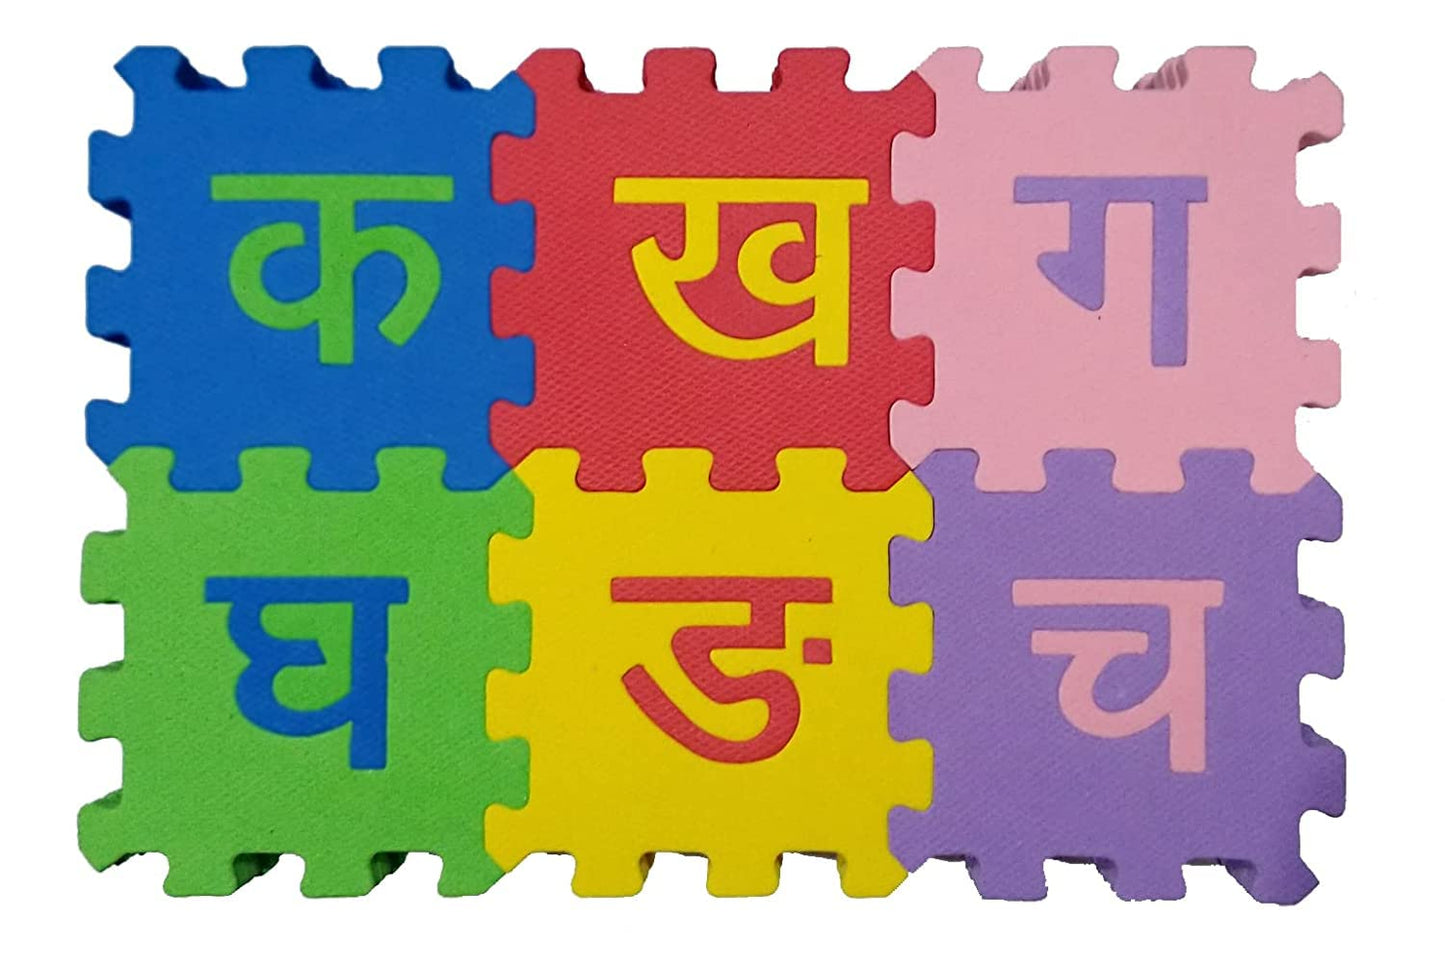 MM TOYS Eva Foam Hindi Alphabets Learning - Varnmala Interlocking Puzzle Foam Floor Mat for Kids, Multicolor